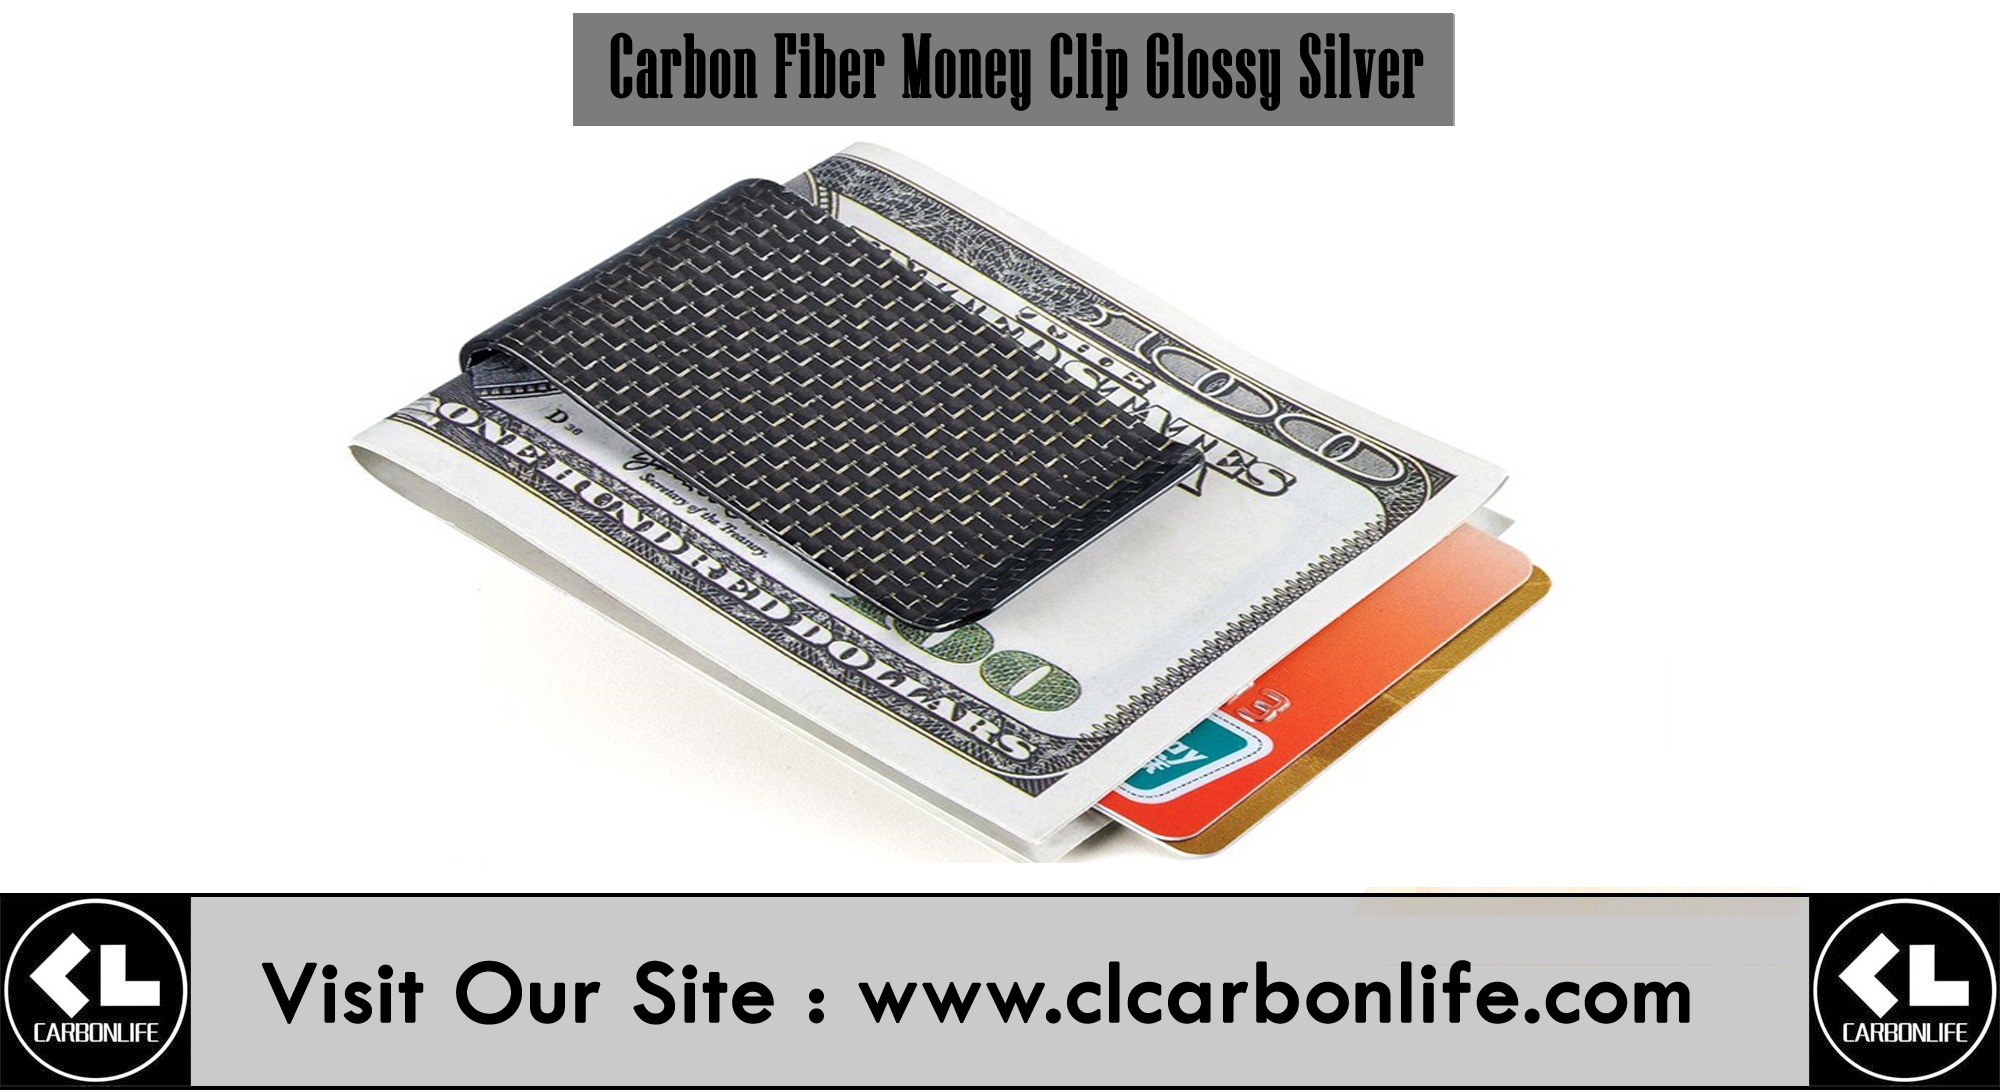 Carbon Fiber Money Clip Glossy Silver